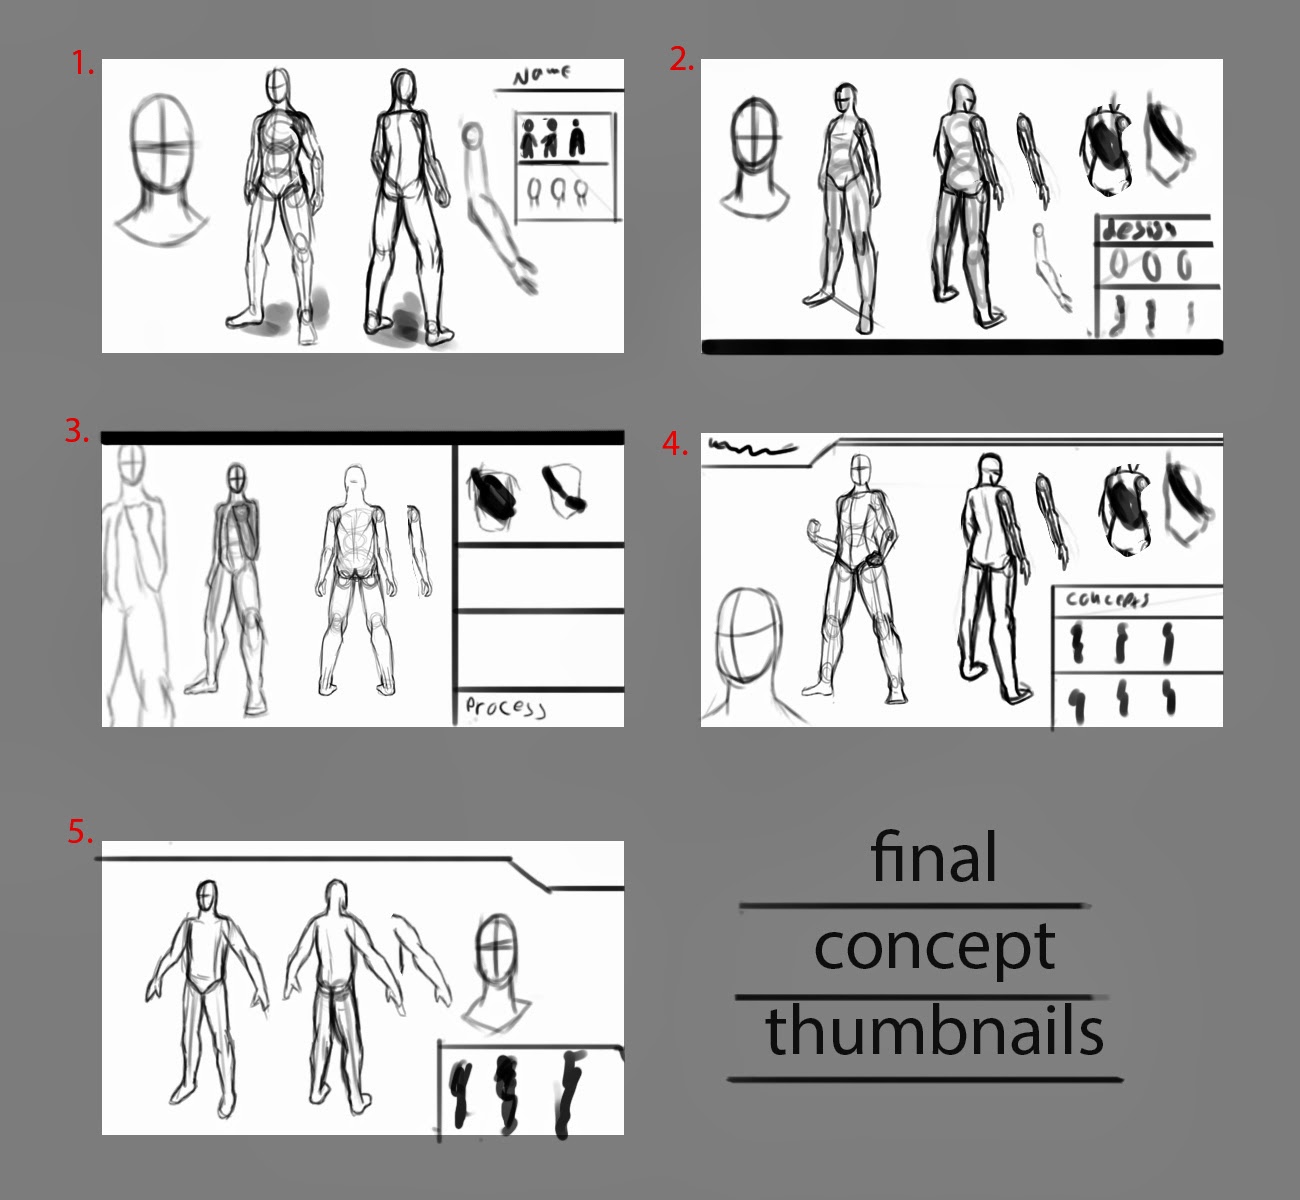 final+concept+thumbnails.jpg